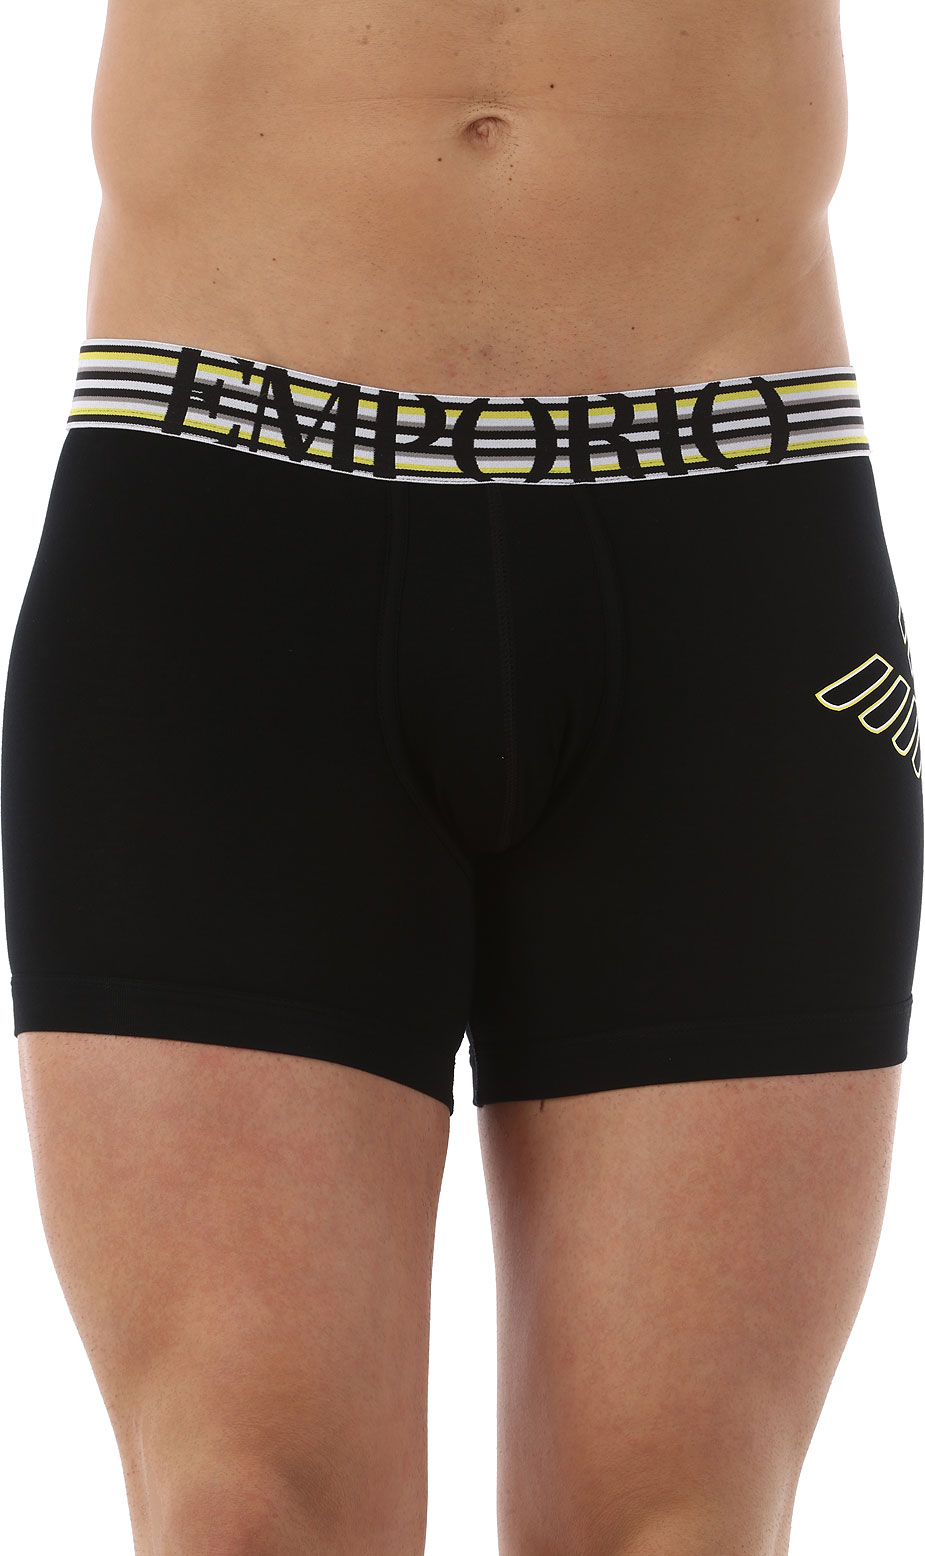 Mens Underwear Emporio Armani, Style code: 111998-7p725-00020